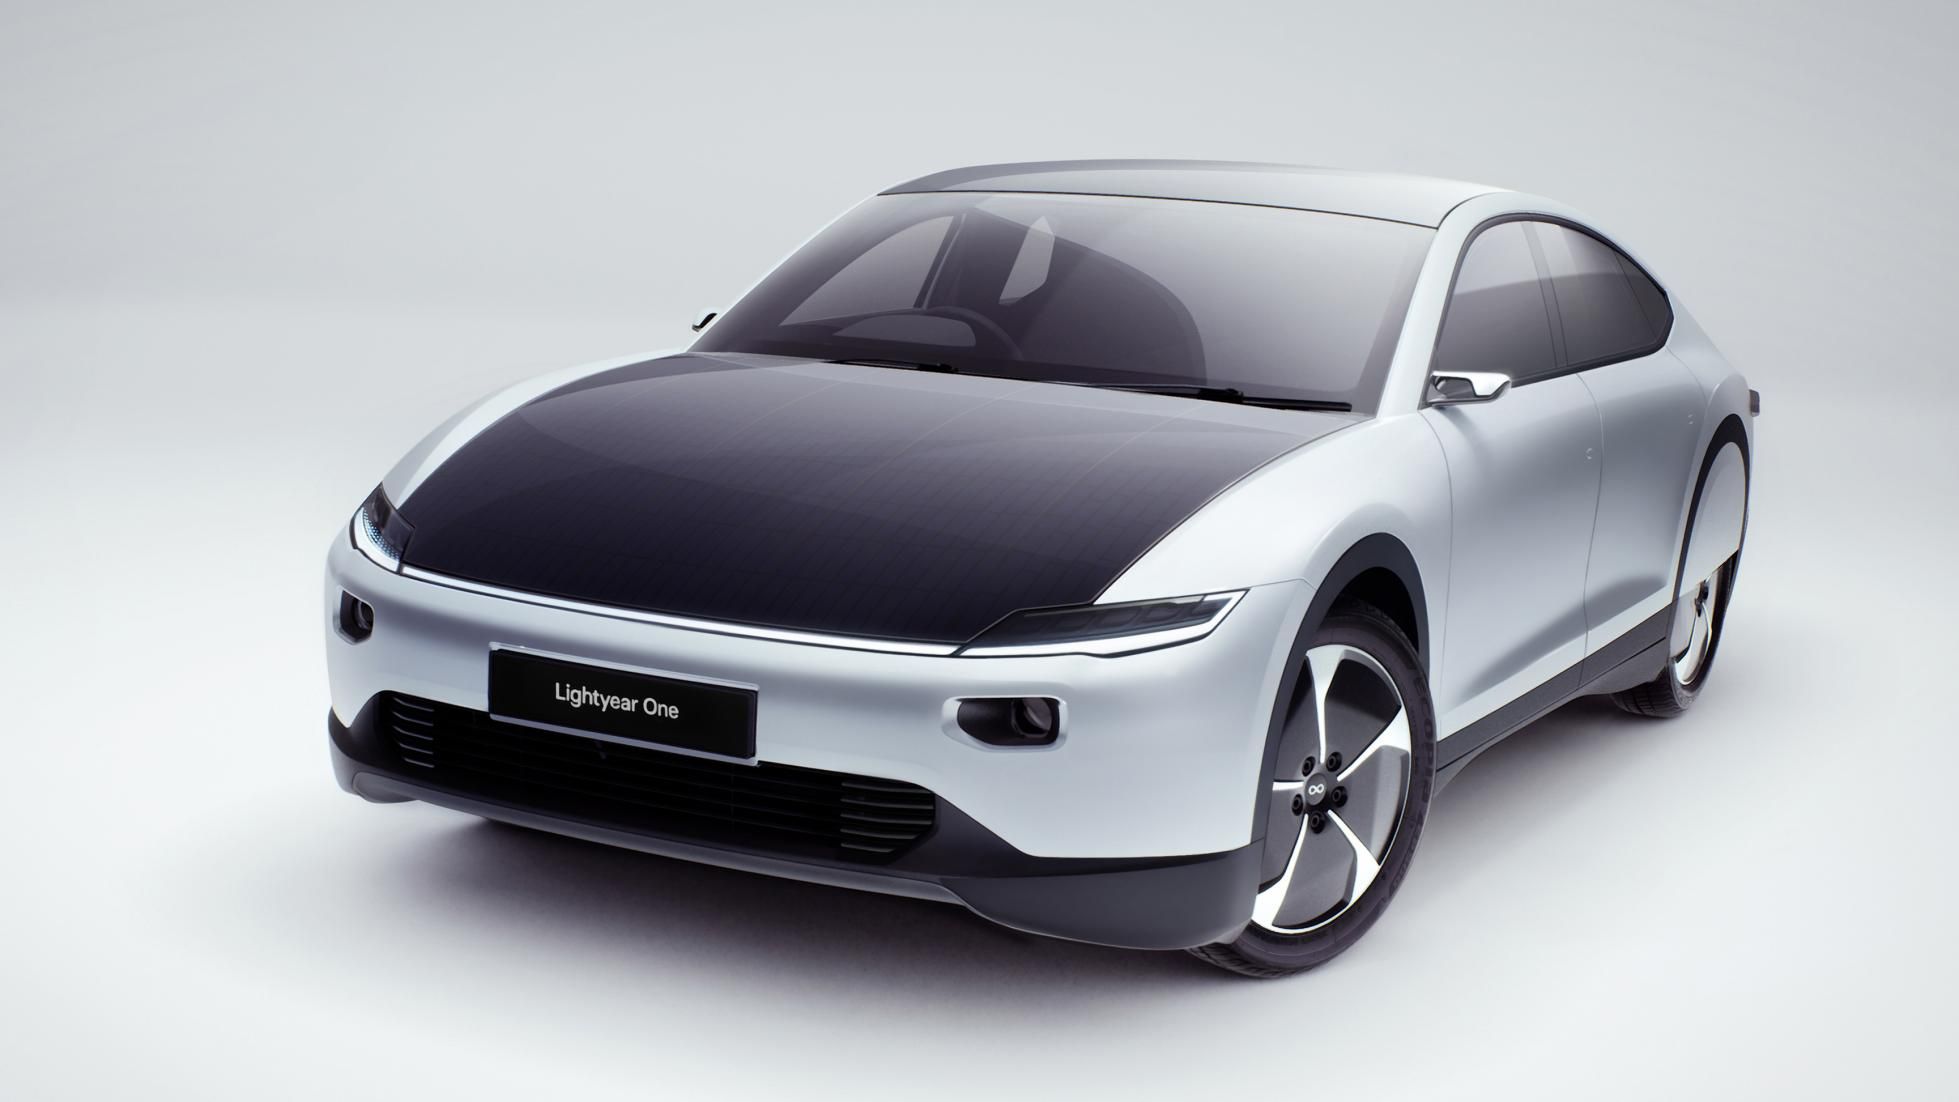 2019 Lightyear One is a viable solar sedan that’s headed for production